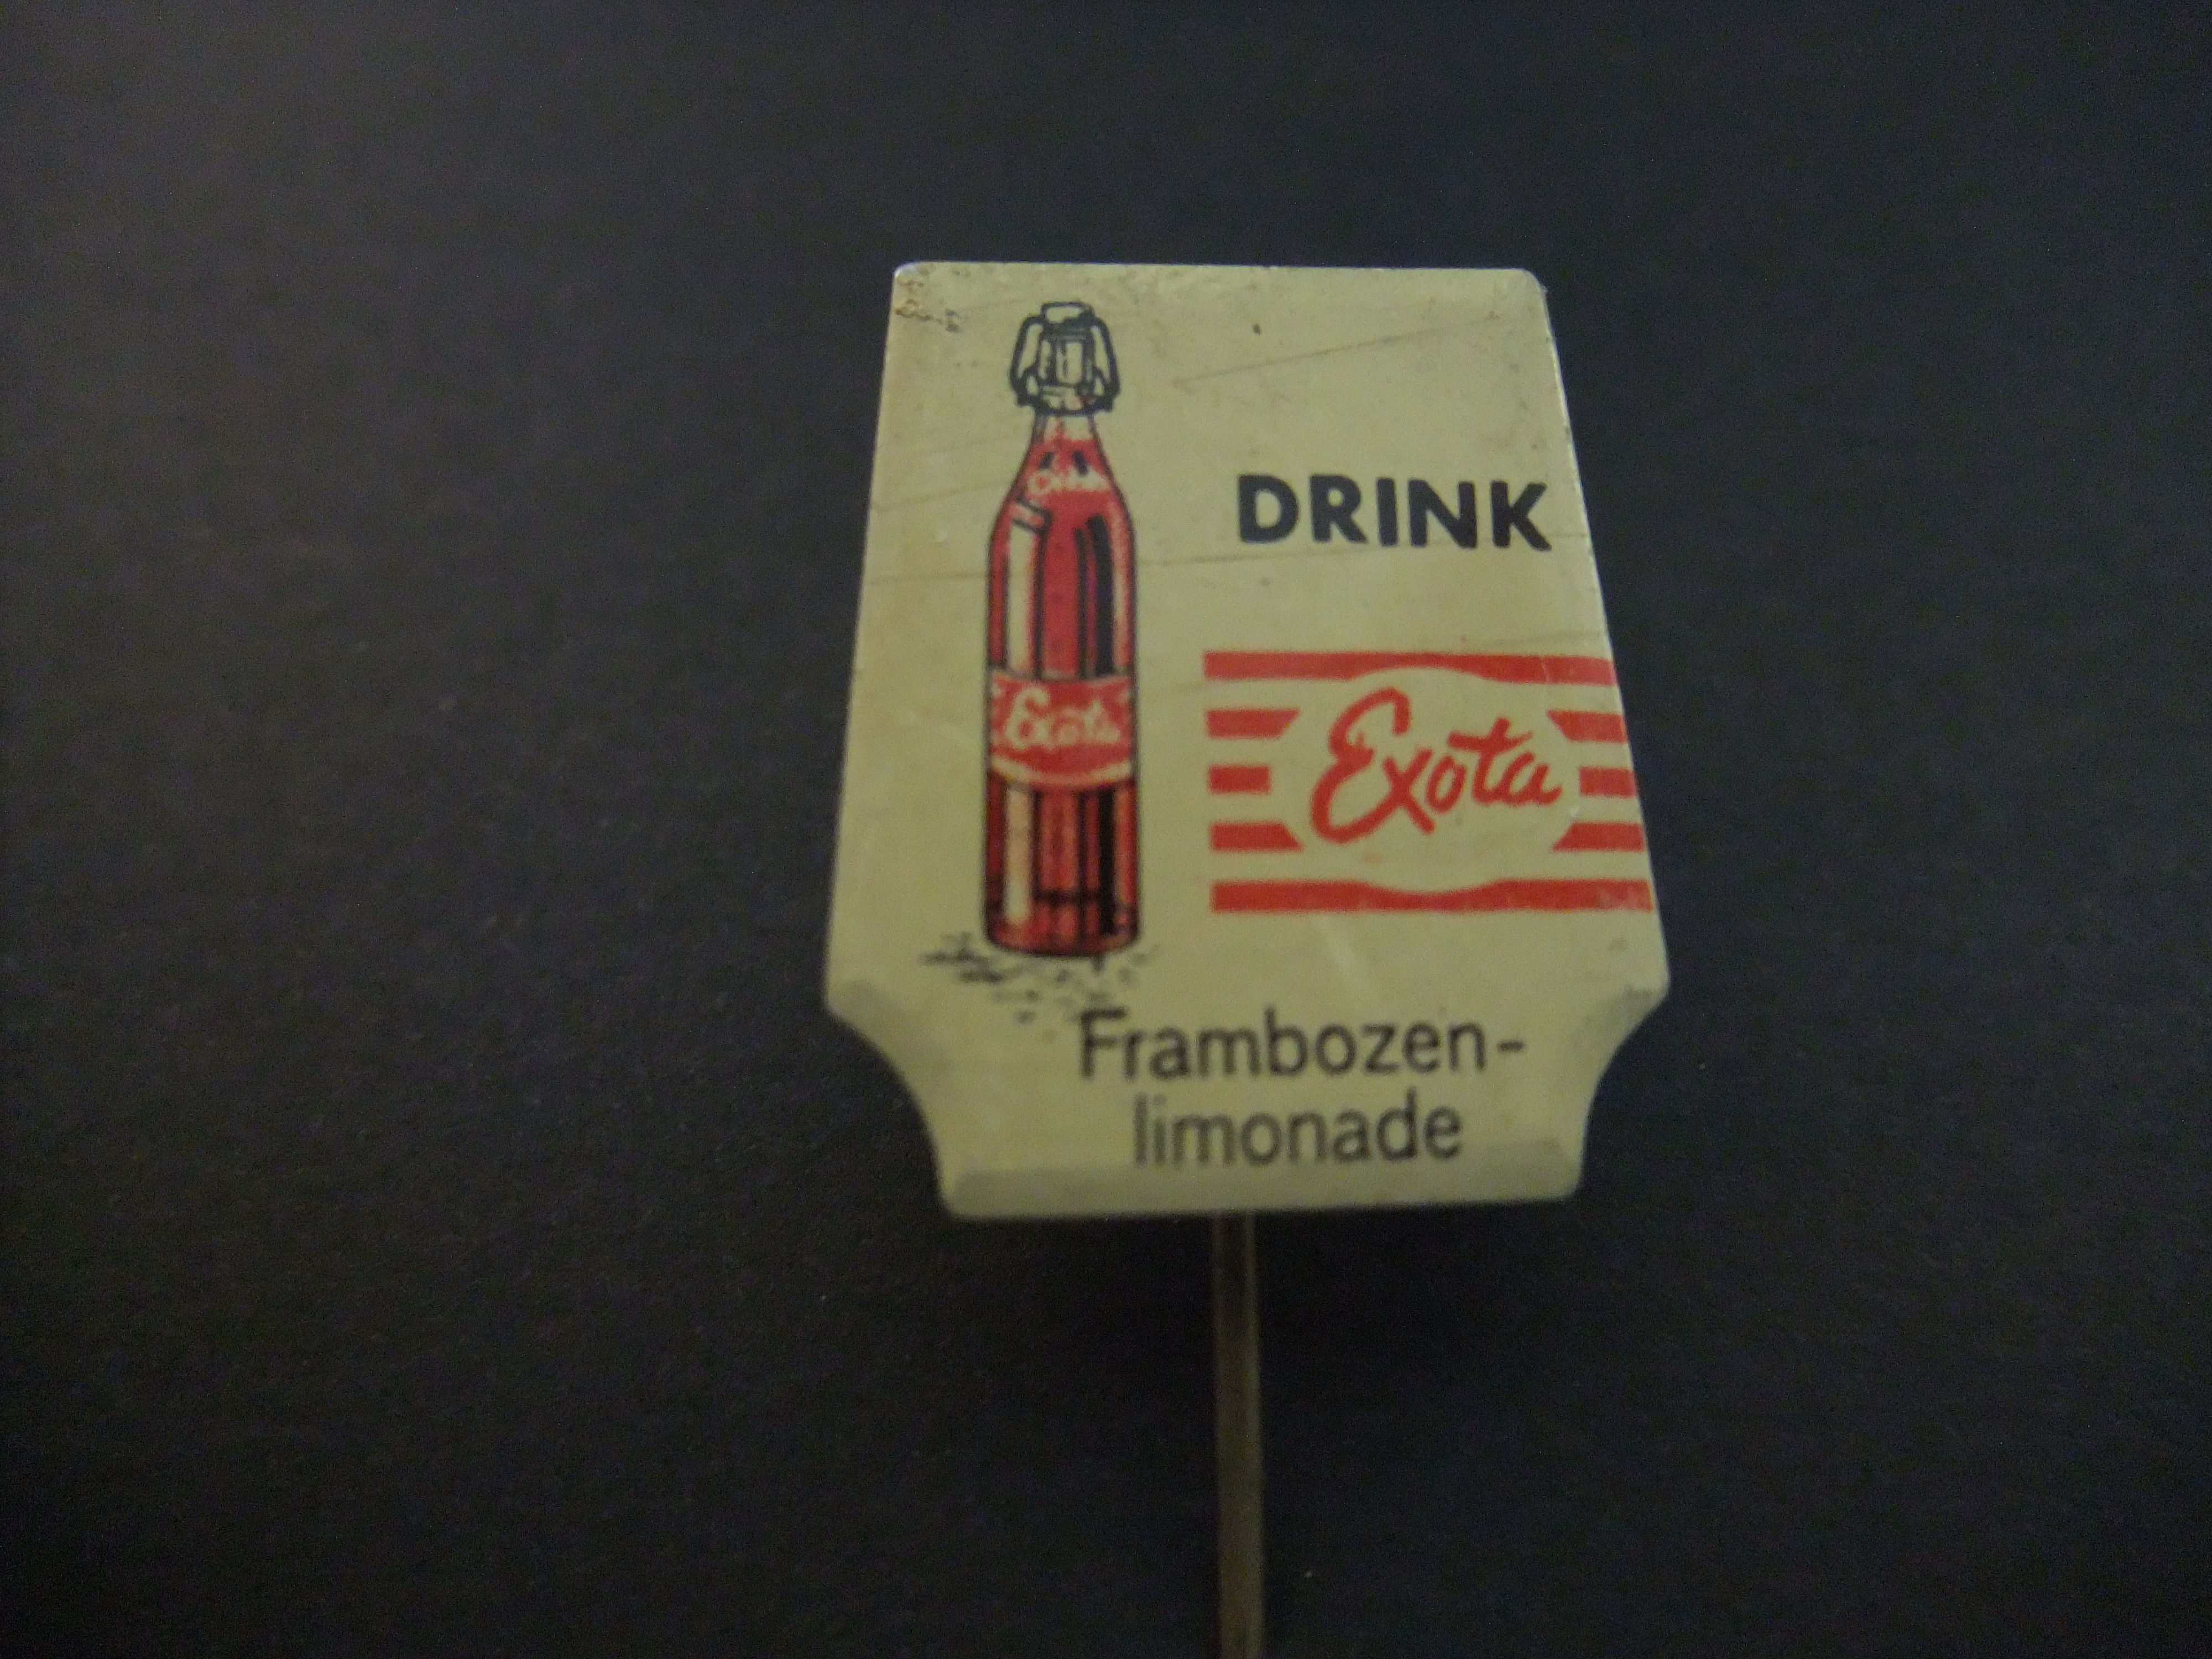 Exota felkleurige frisdrank uit de jaren vijftig.(frambozen)